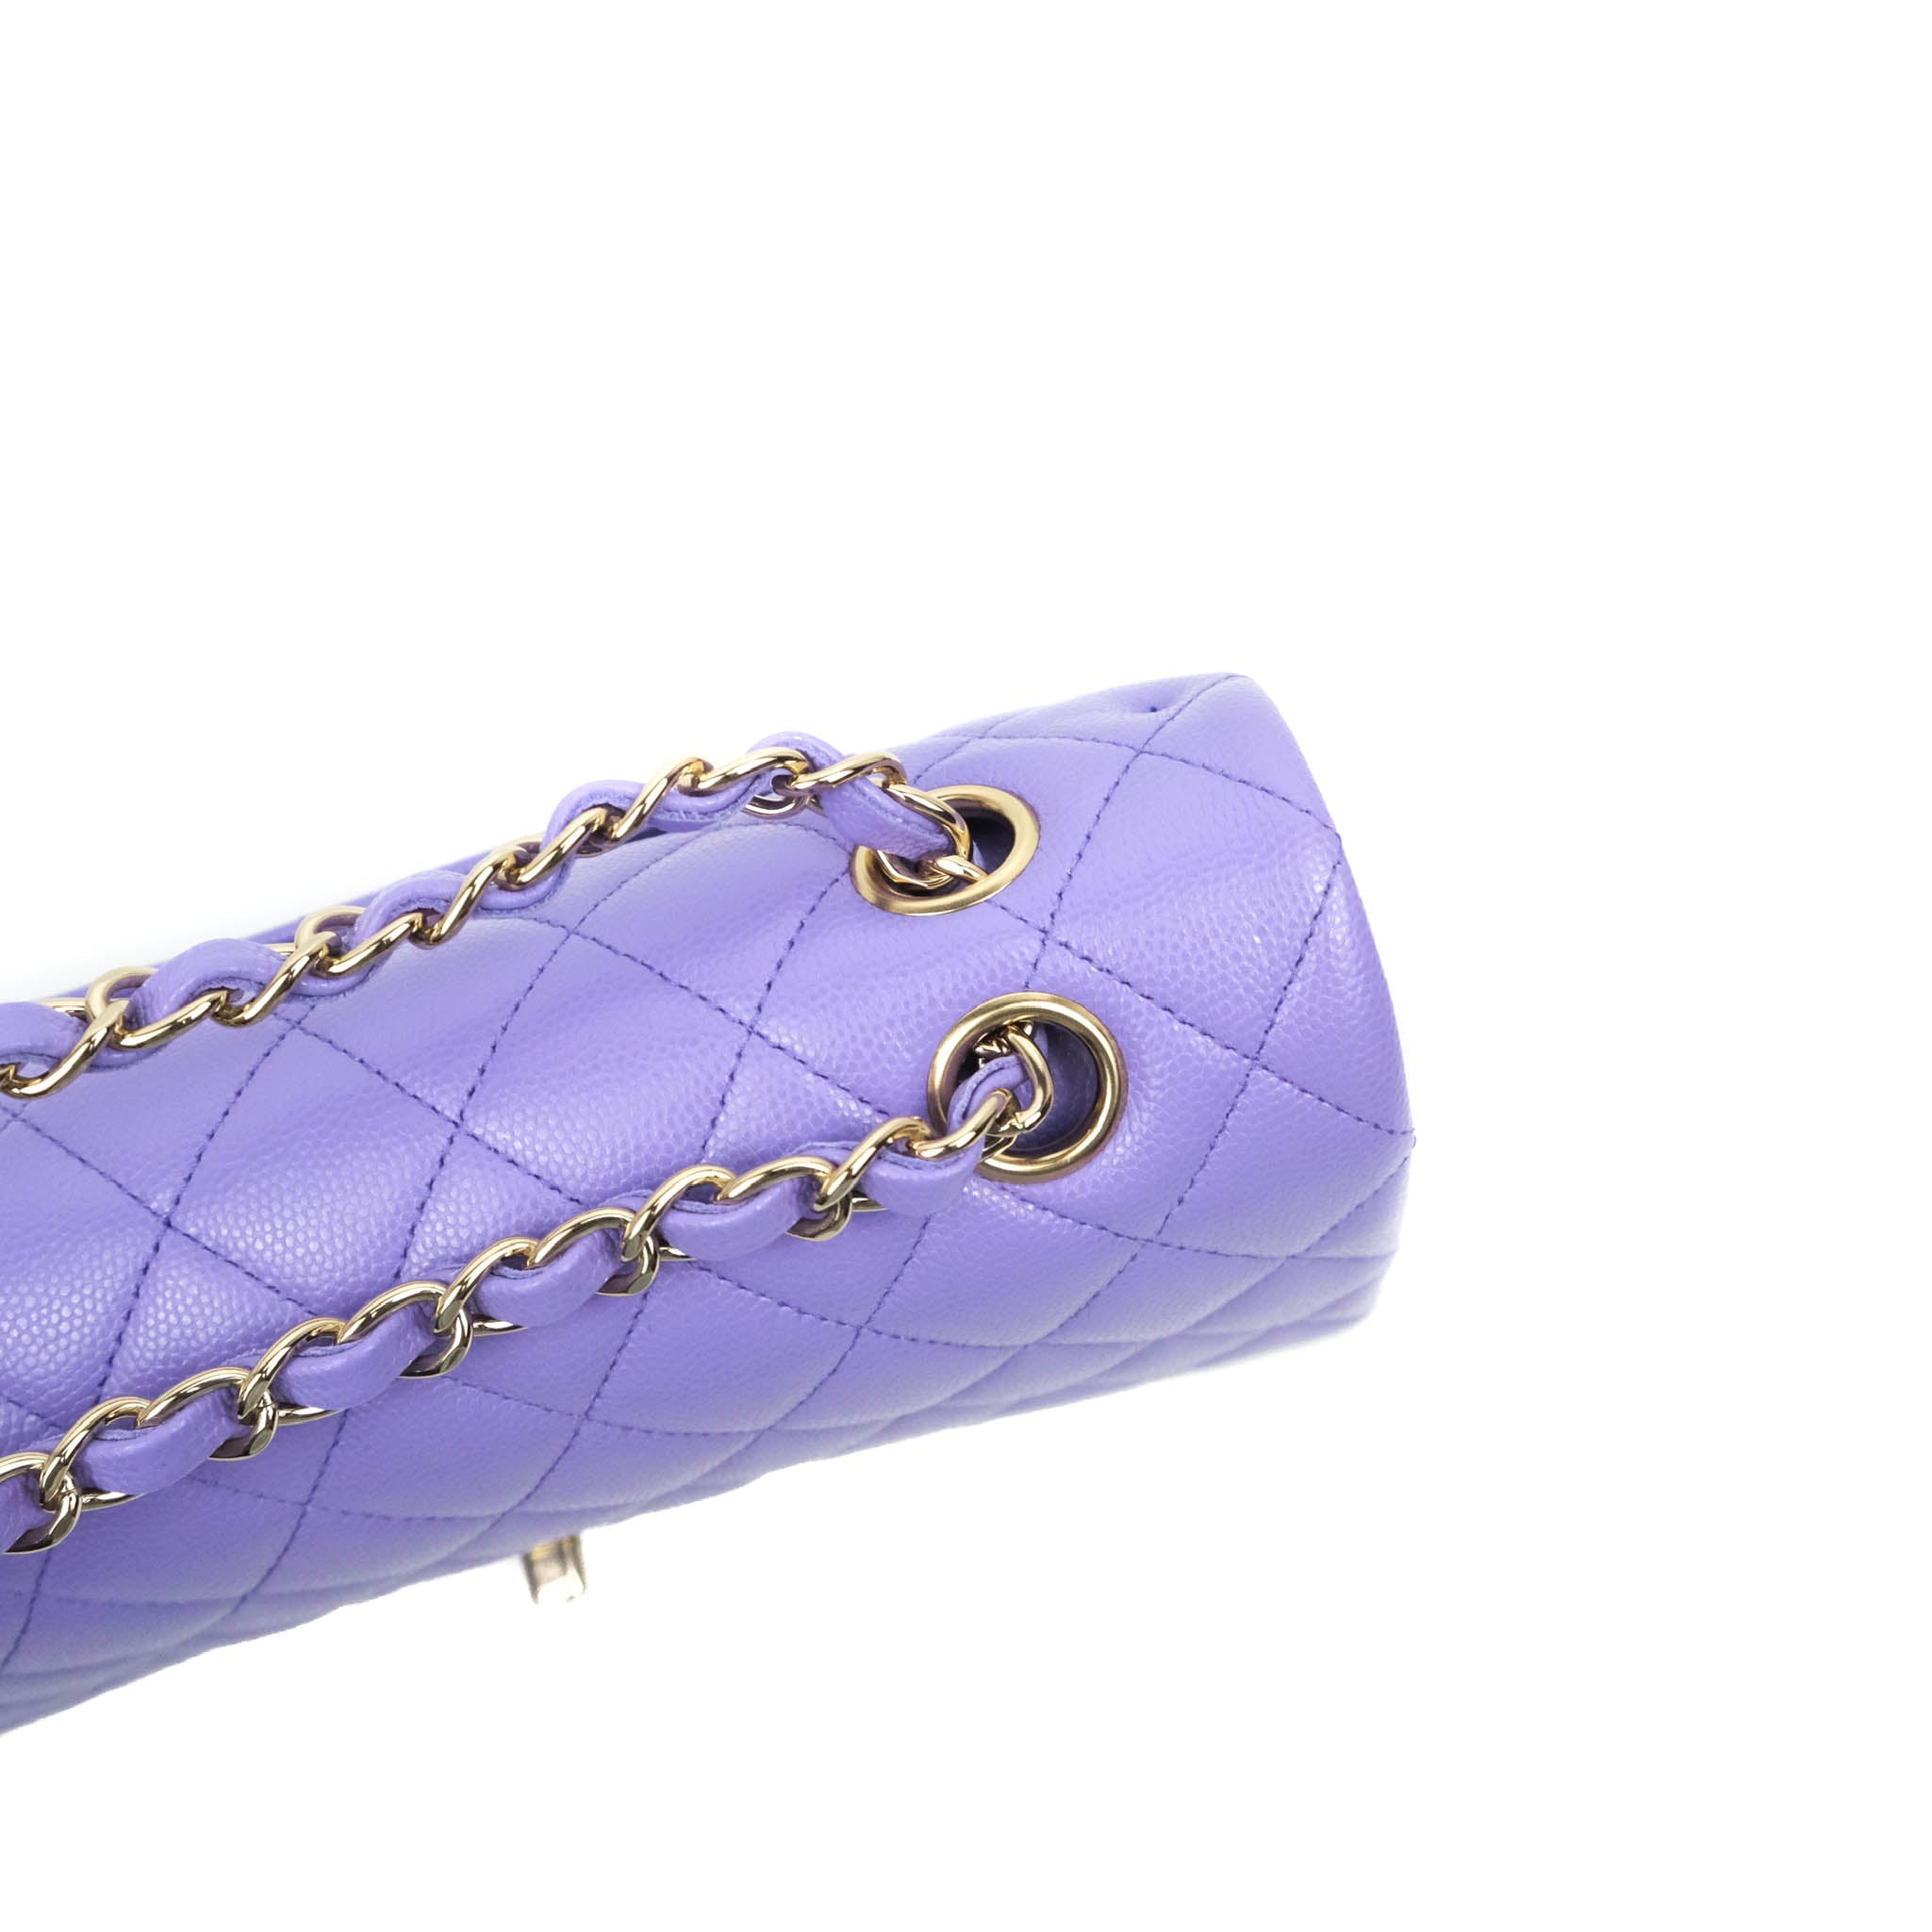 Chanel Metallic Purple Quilted Lambskin Classic Double Flap Medium  Q6B0104NU0000